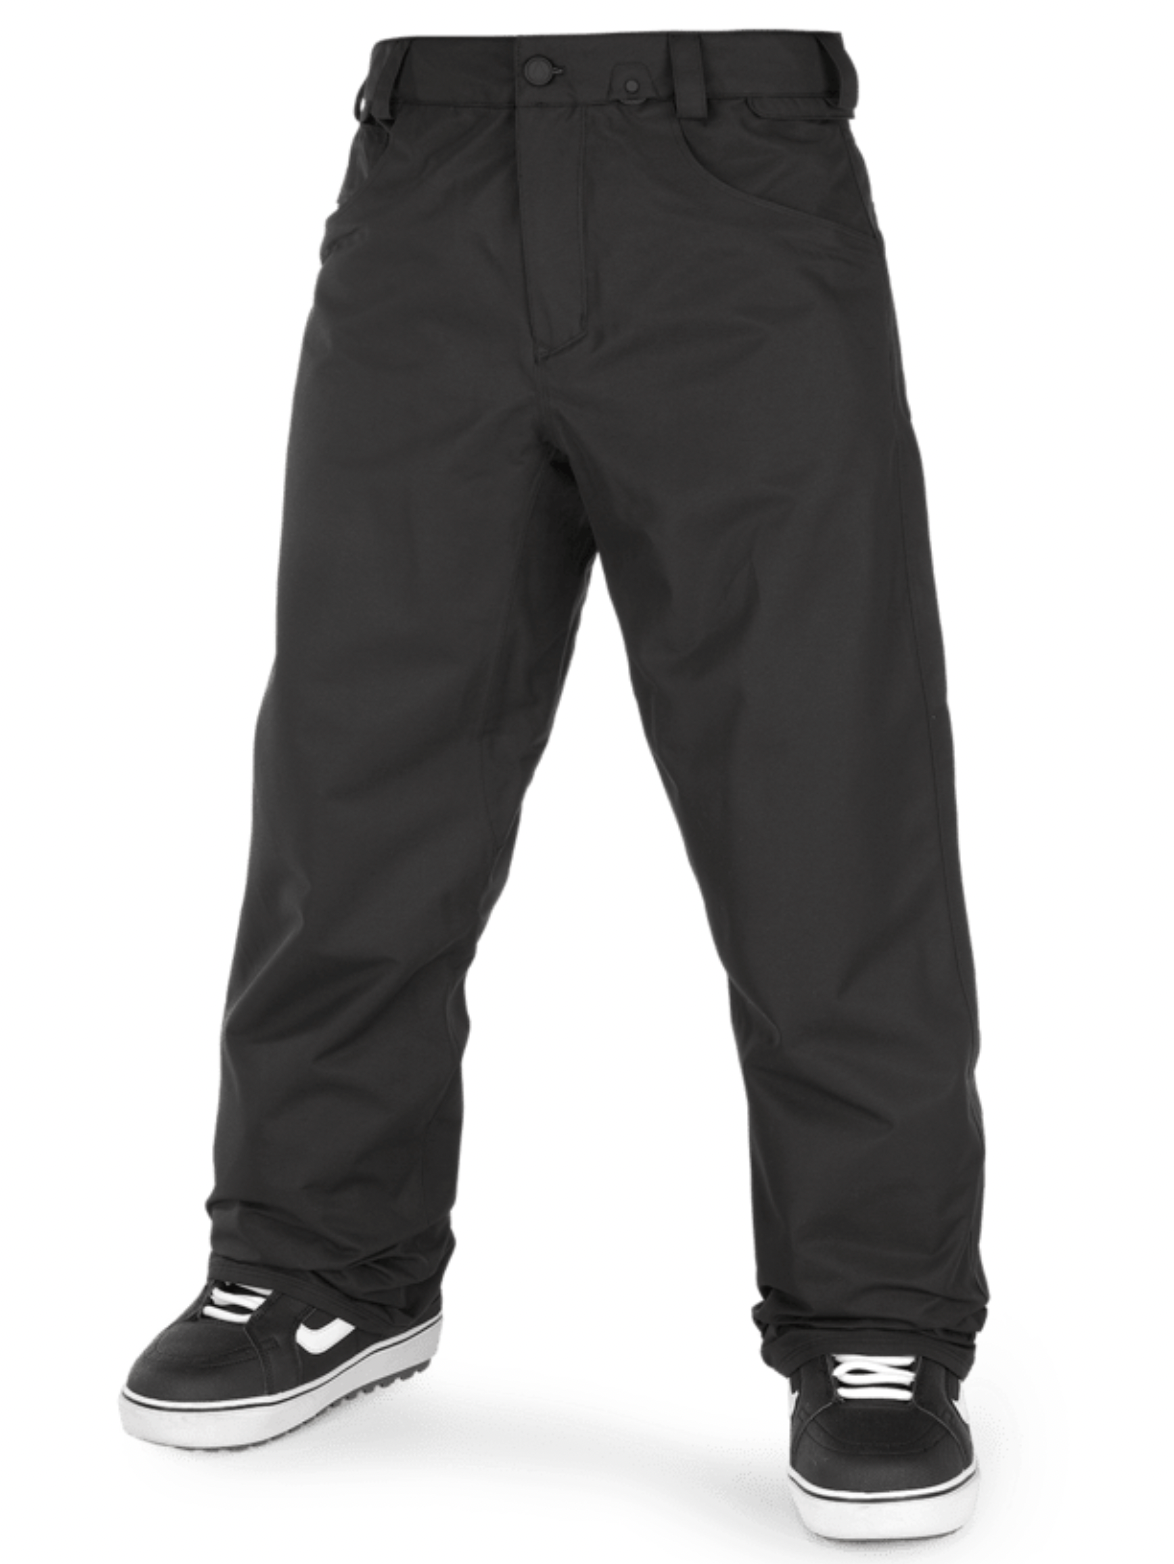 Pantalón técnico Negro 5-Pocket Volcom Snowboarding